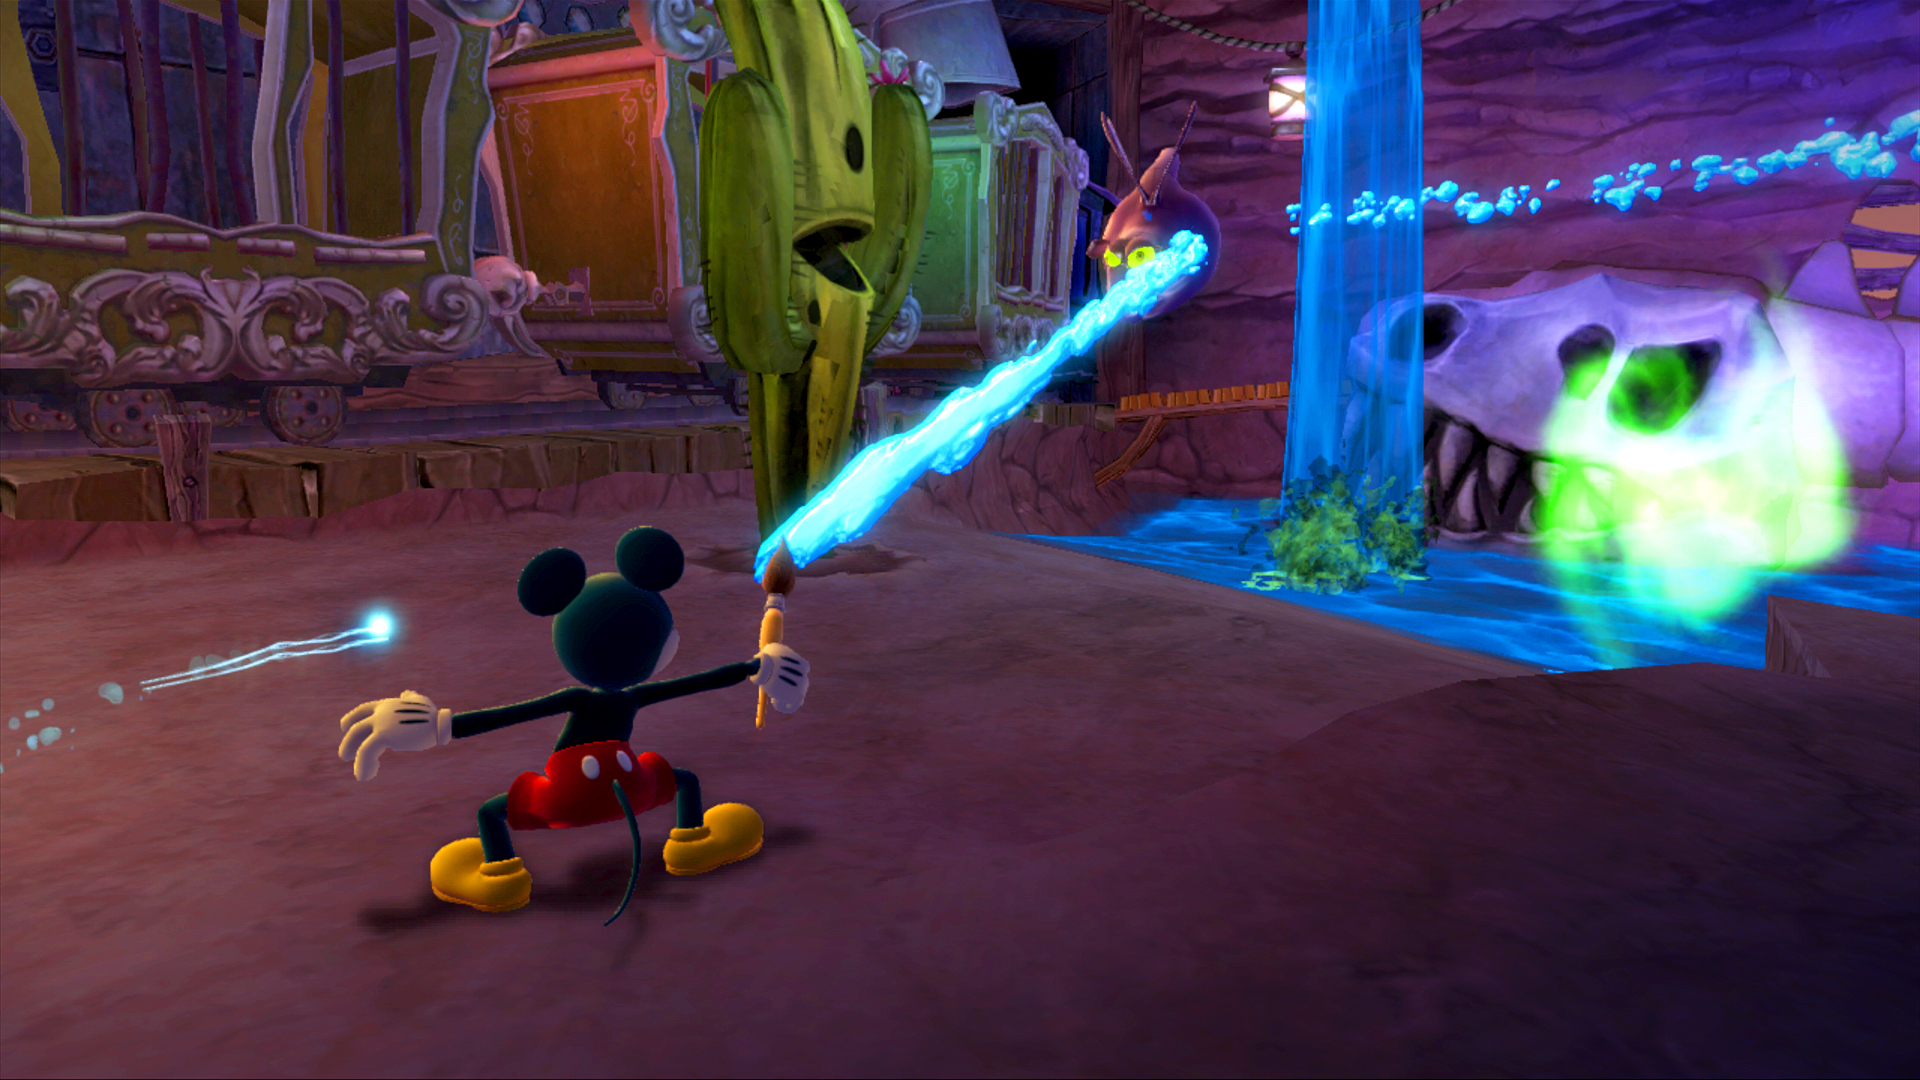 Amazoncom: Disney Epic Mickey 2: The Power of Two